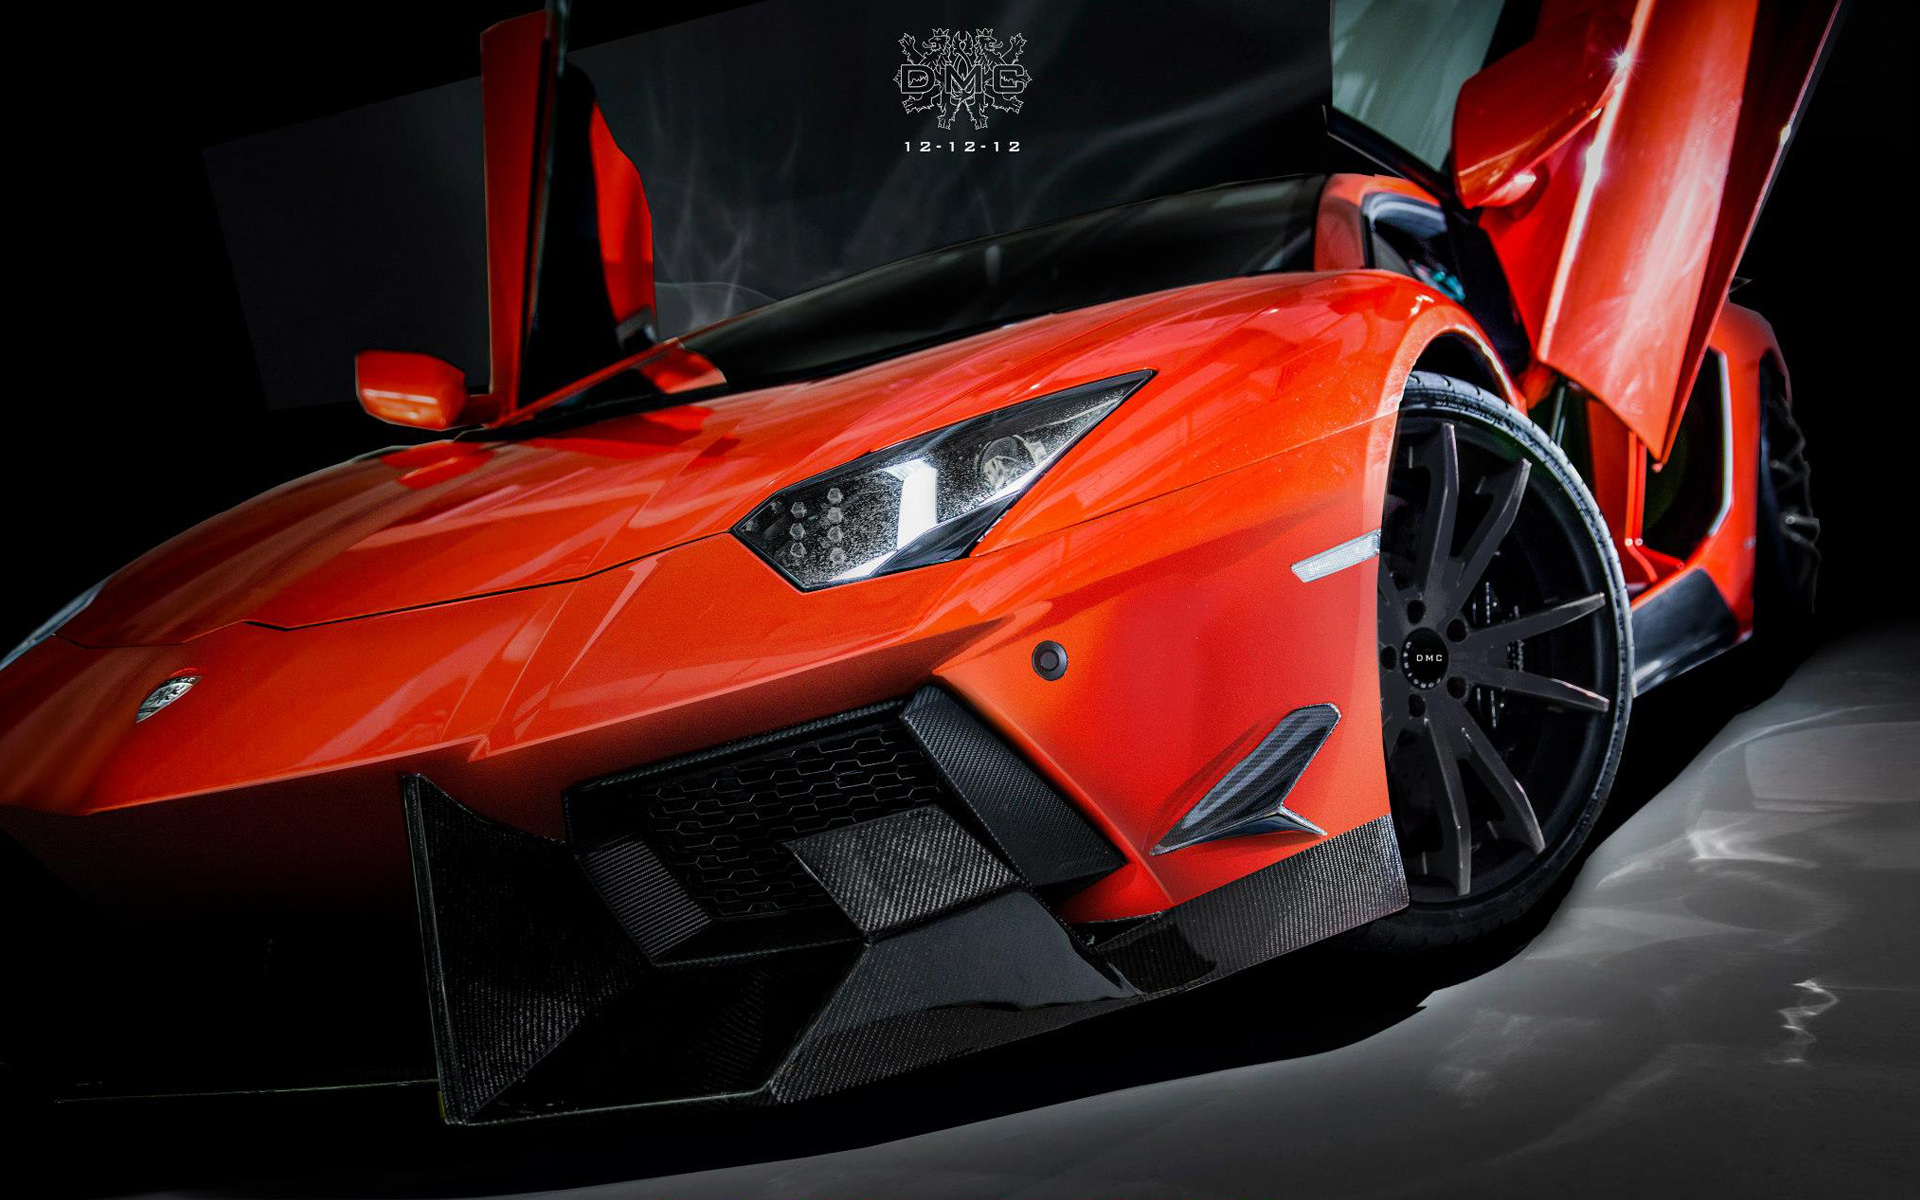 Dmc Tuning Lamborghini Aventador By HDwallpaper In